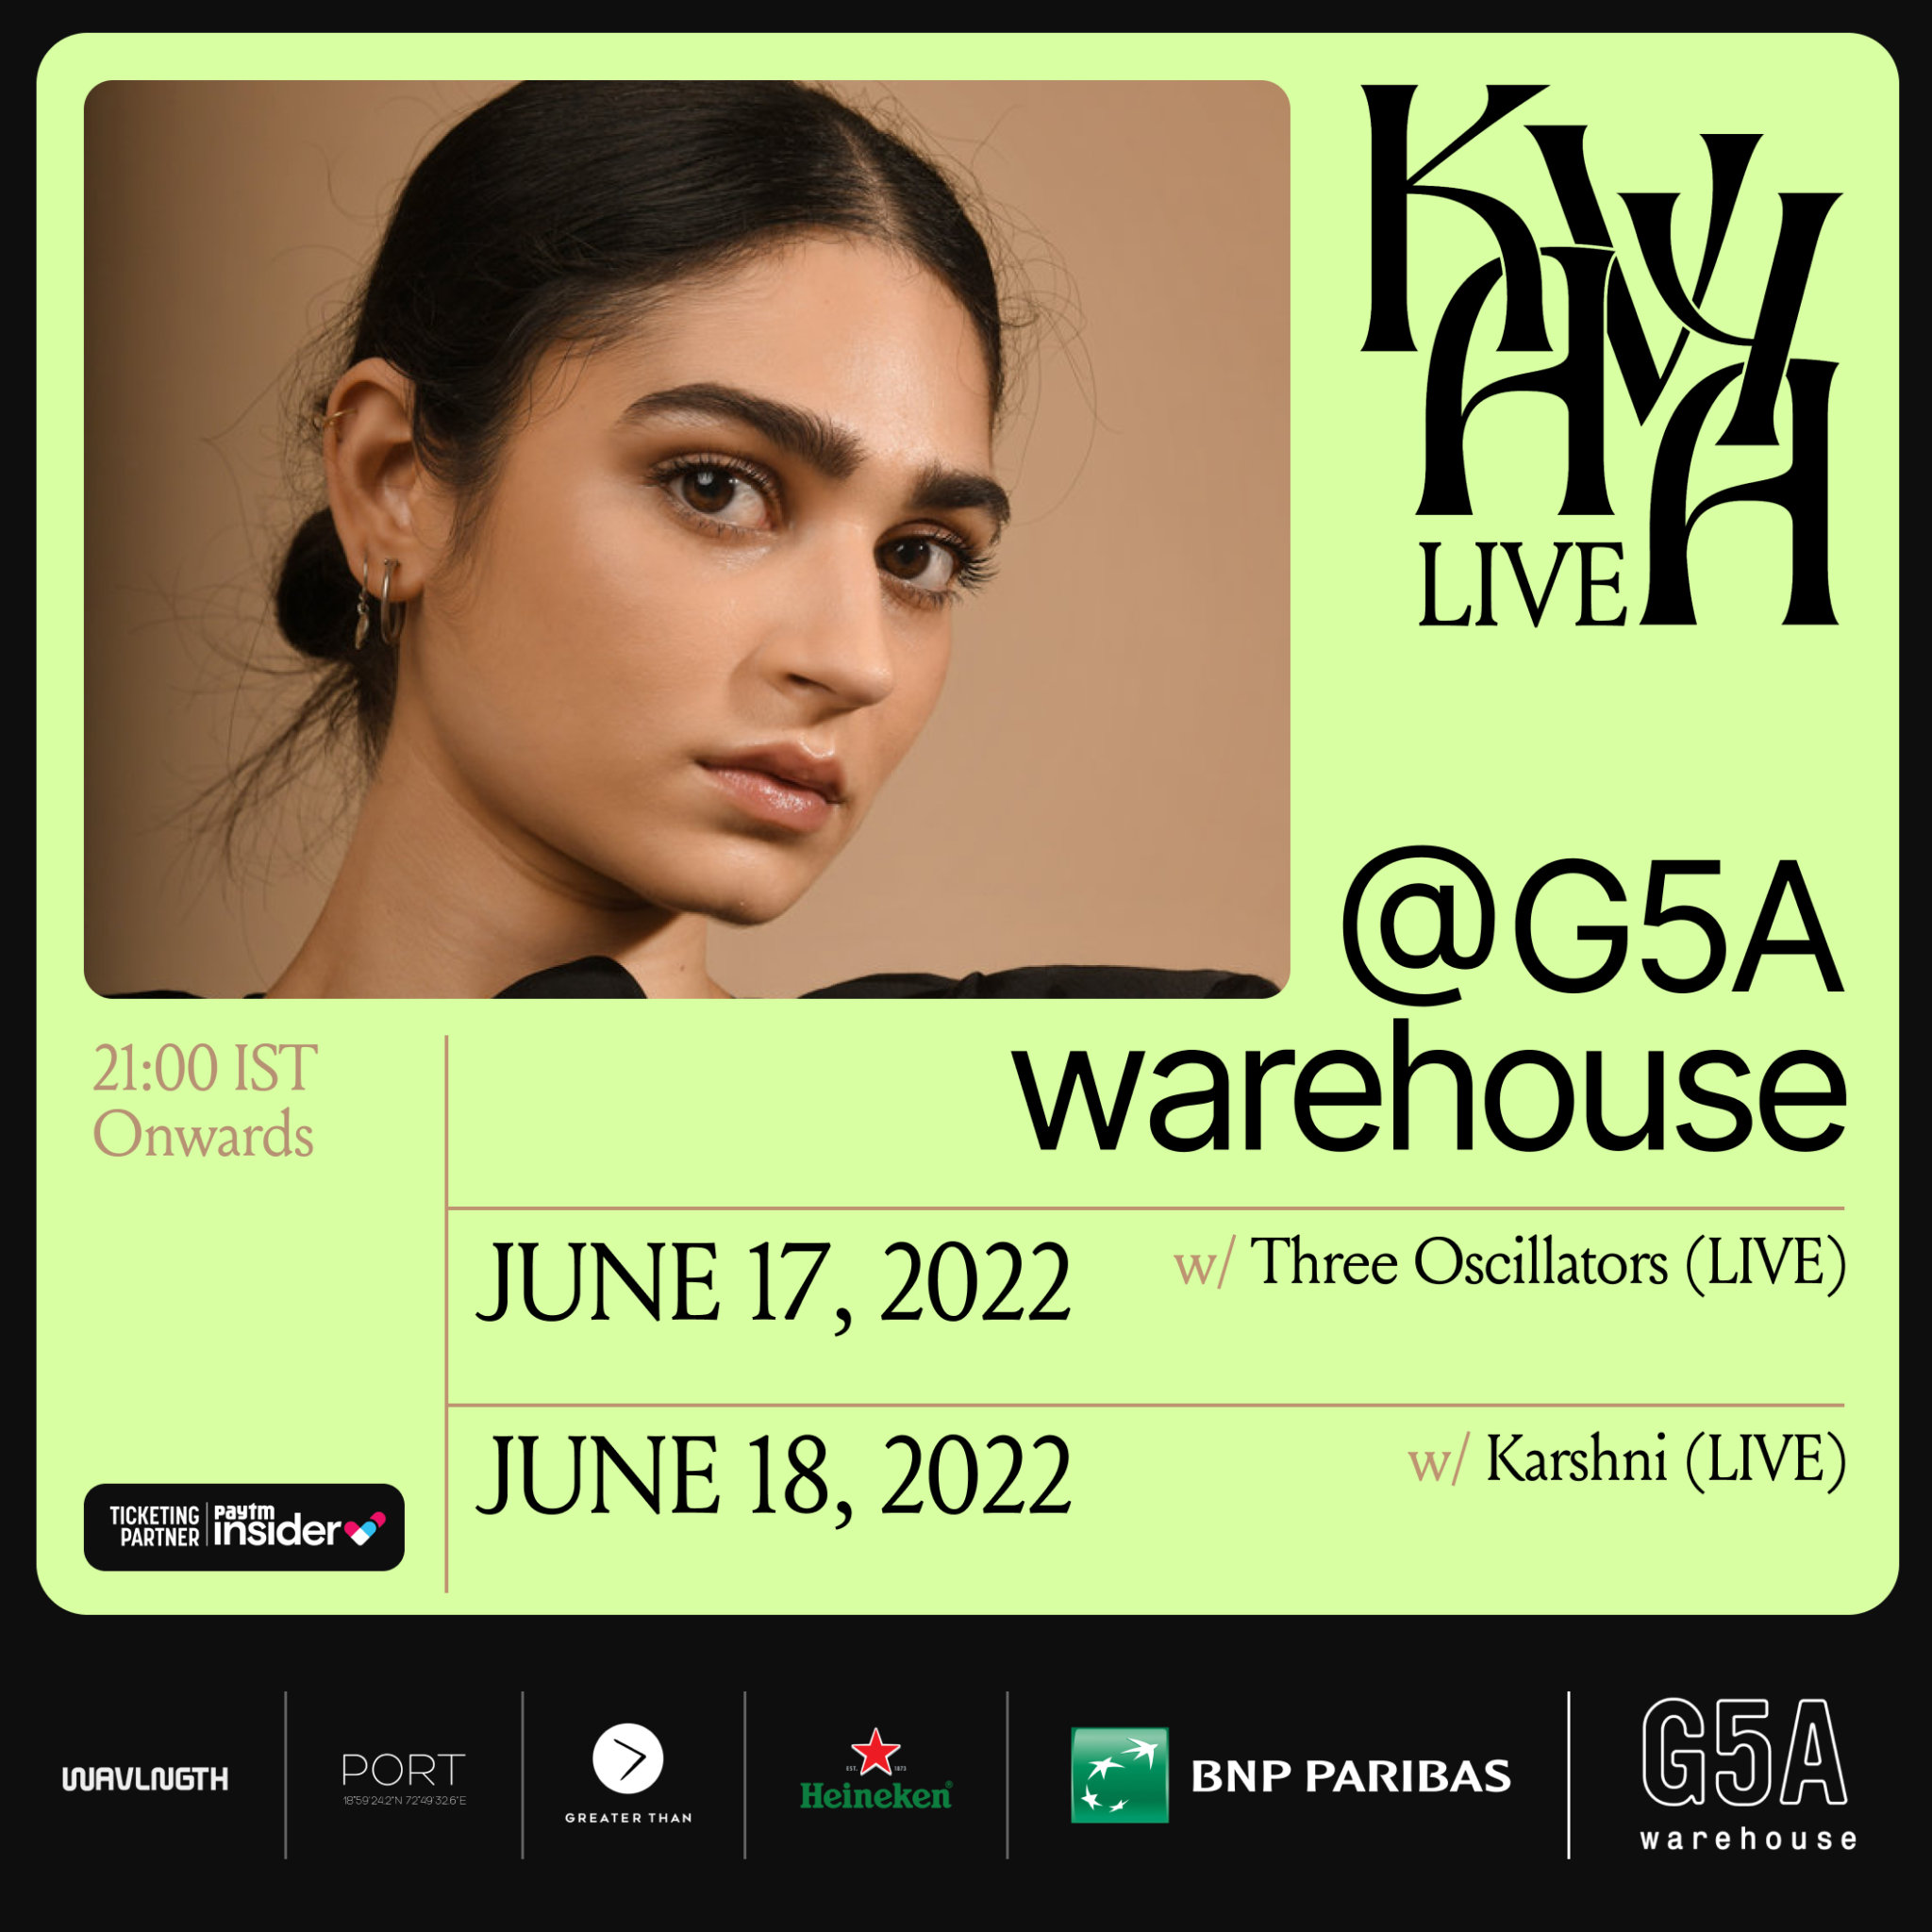 KAVYA LIVE @ the G5A warehouse